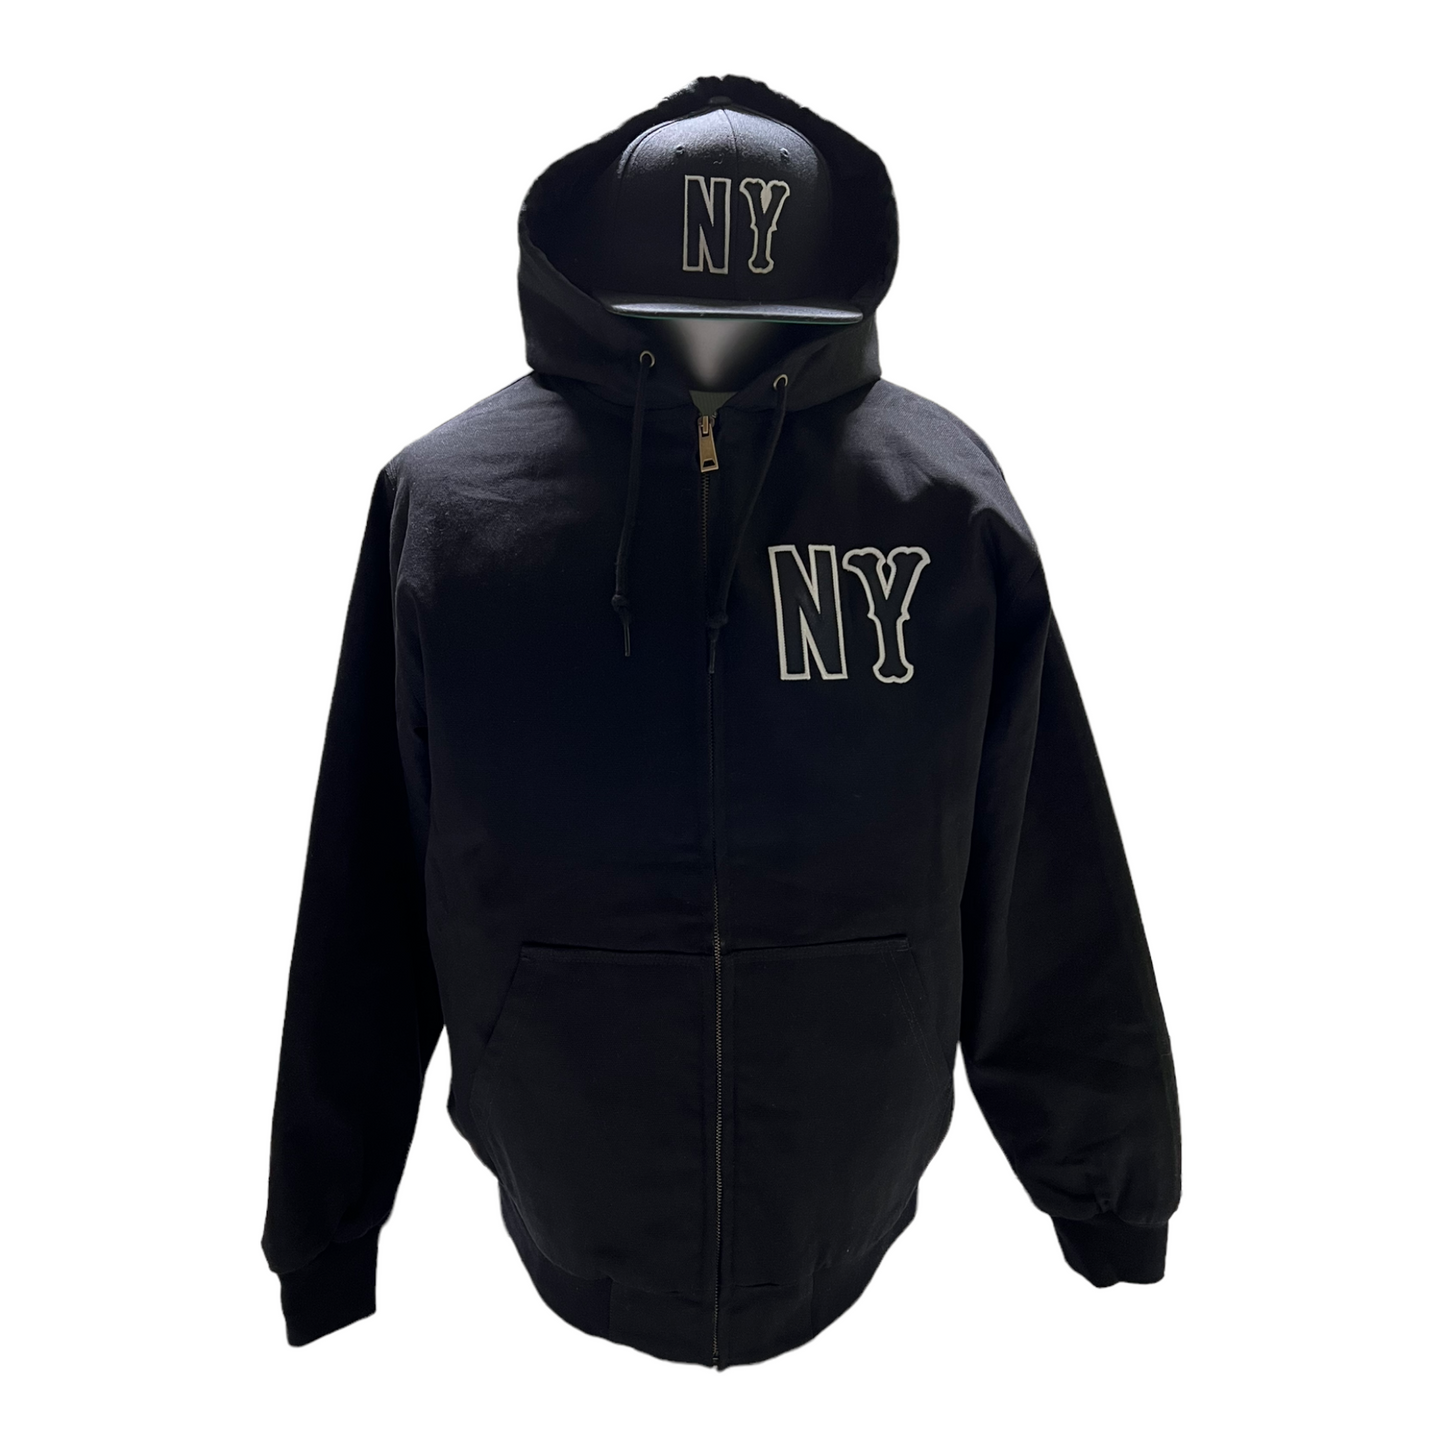 New York Jacket